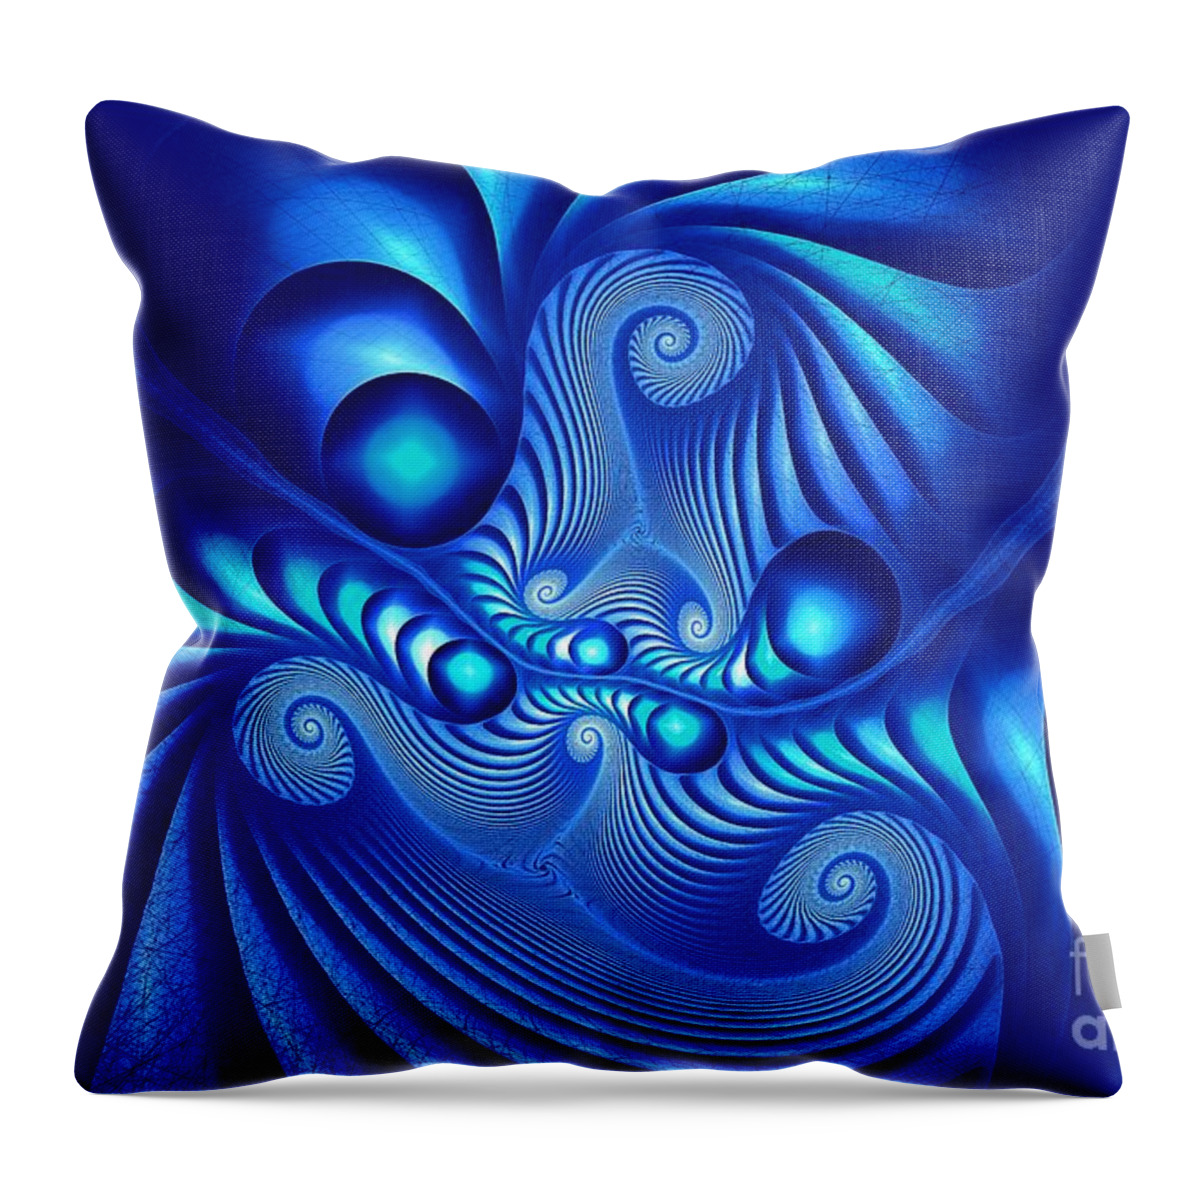 The Corinthian Order Throw Pillow featuring the digital art Corinthian Fractalation in Blue by Doug Morgan